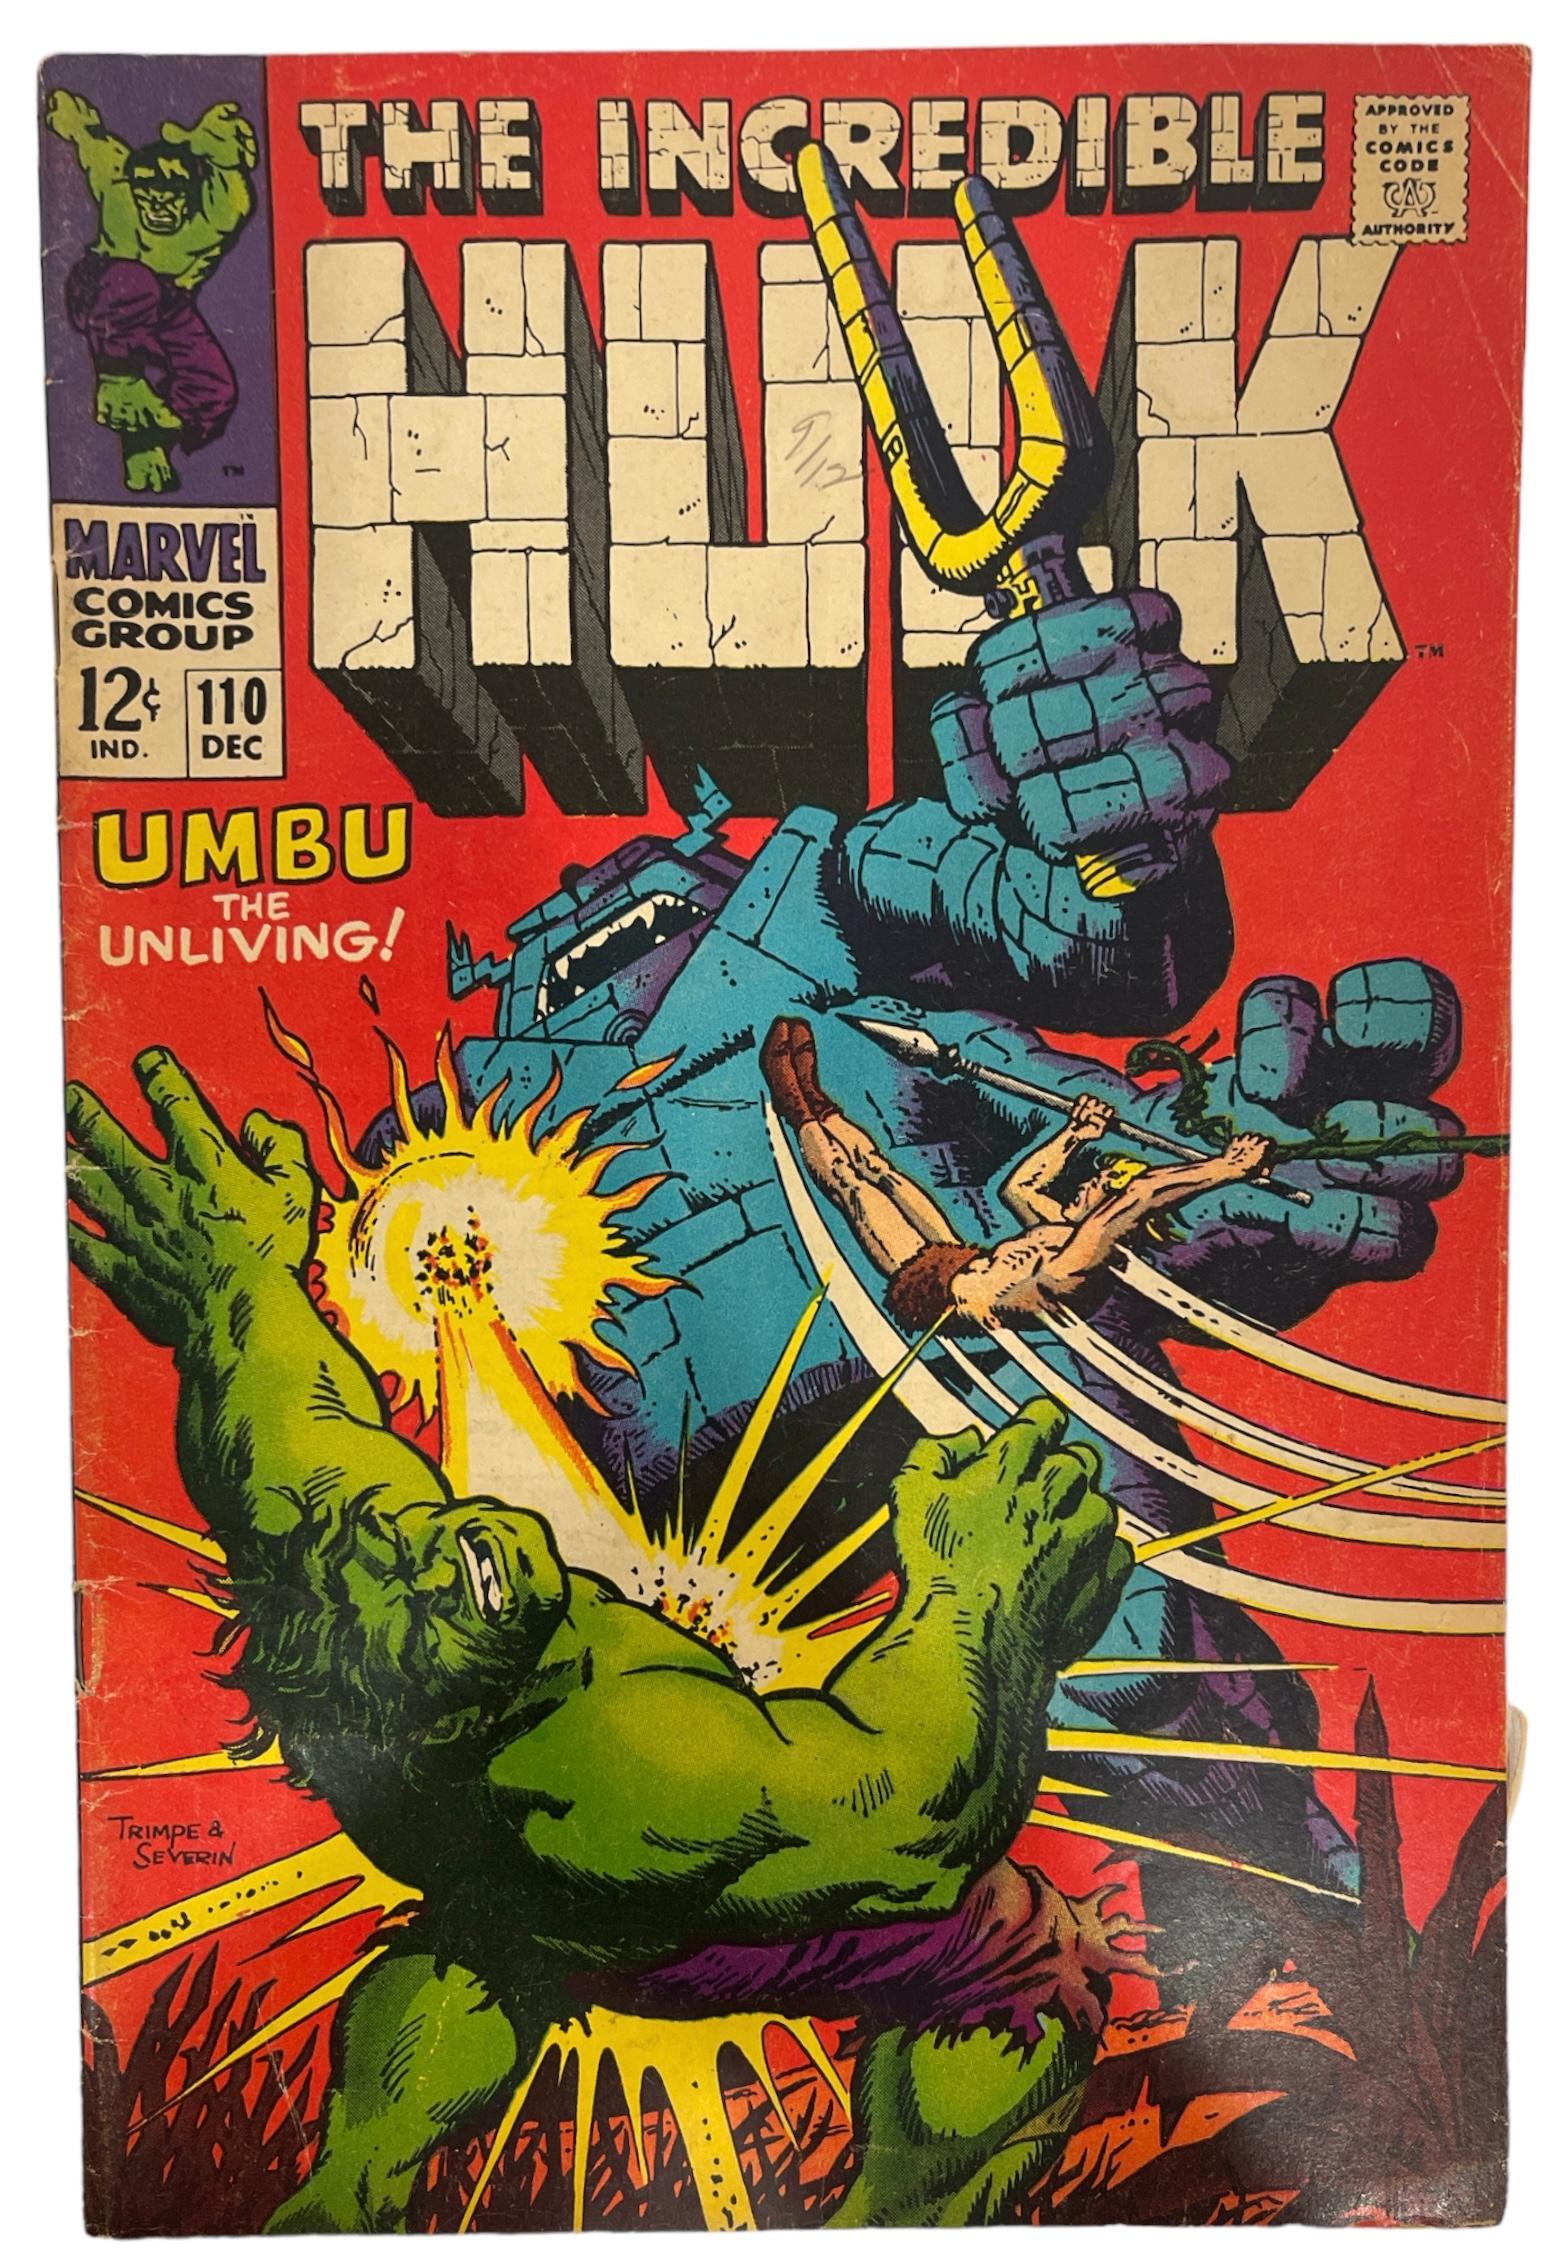 Vintage Marvel Comics - The Incredible Hulk and Sub-Mariner and The Incredible Hulk